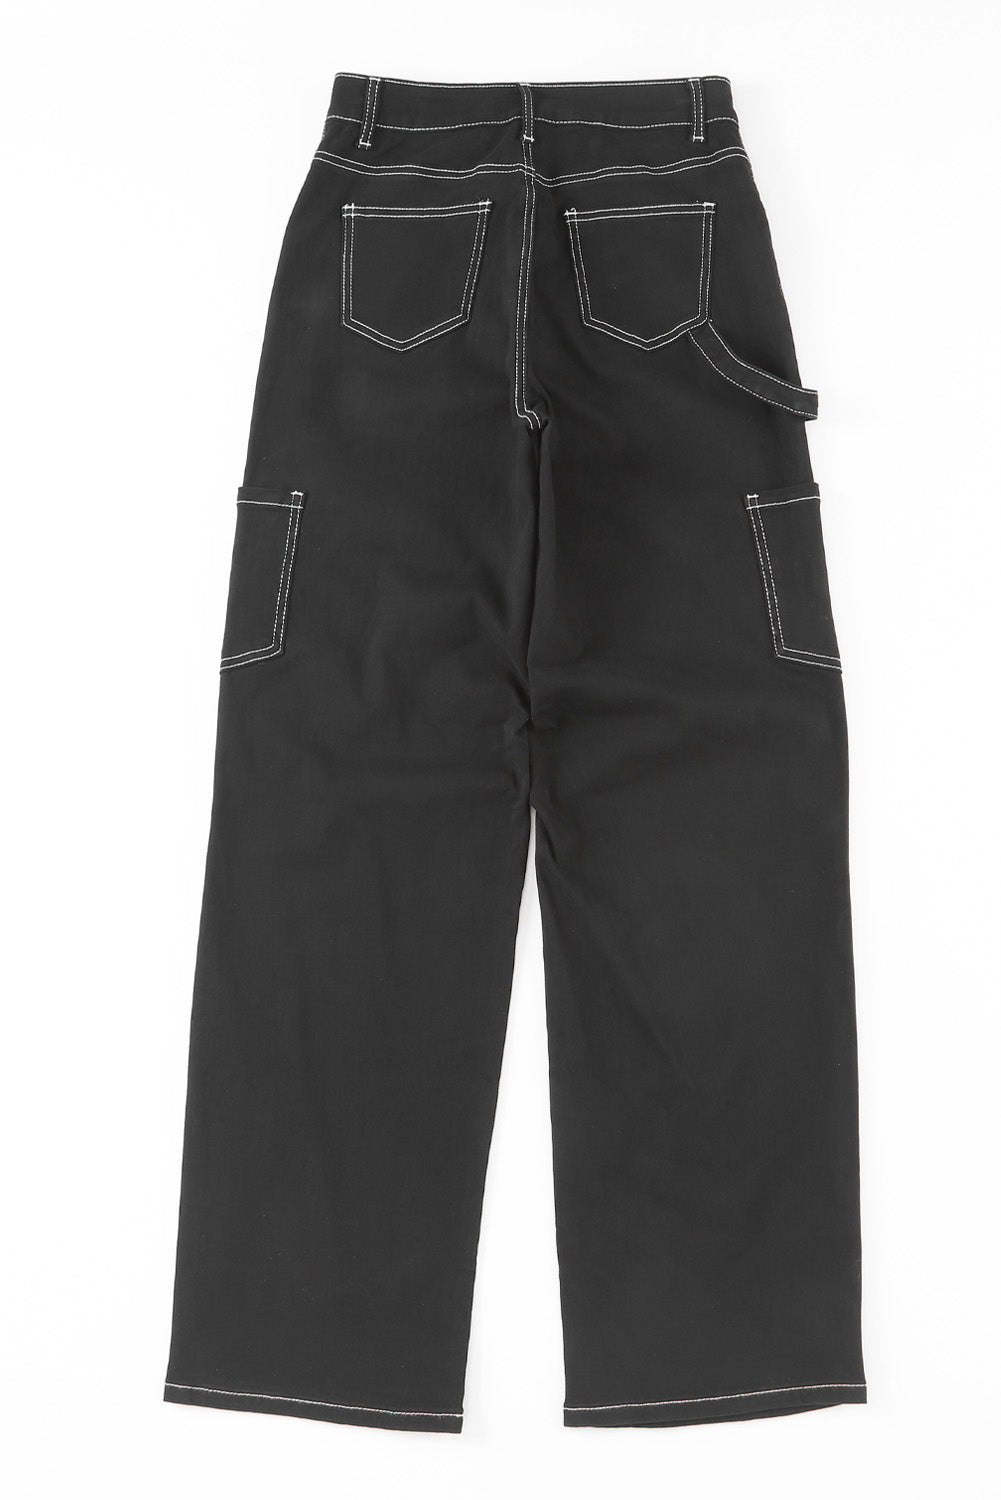 Black High Waist Straight Leg Cargo Pants with Pockets